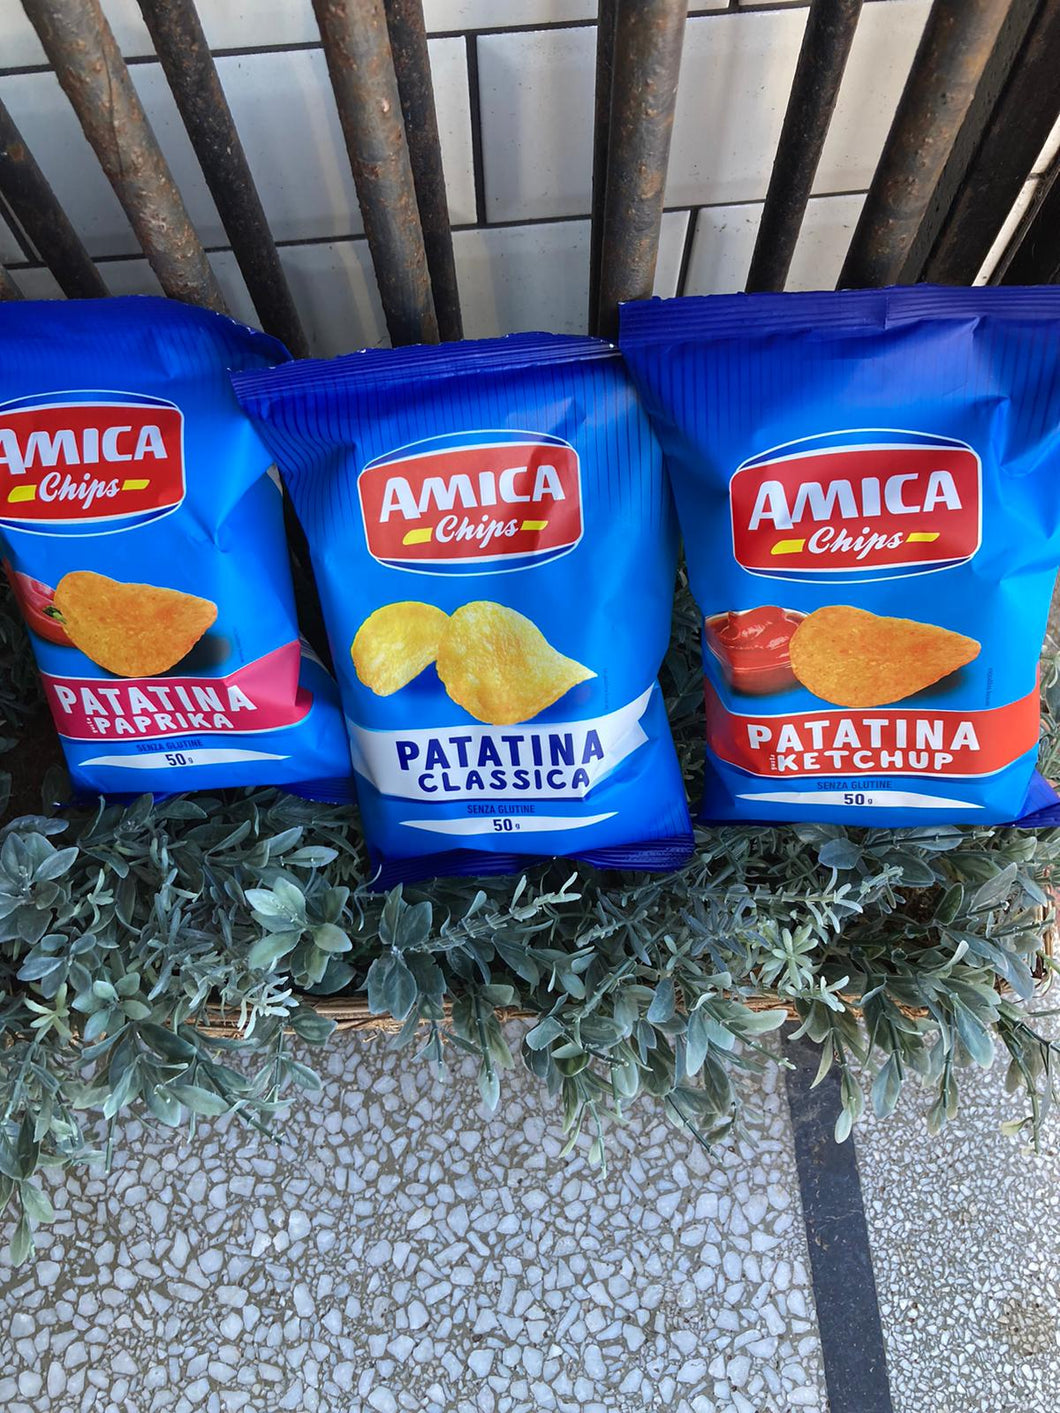 Paprika Amica Italian Crisps 50g Gluten Free